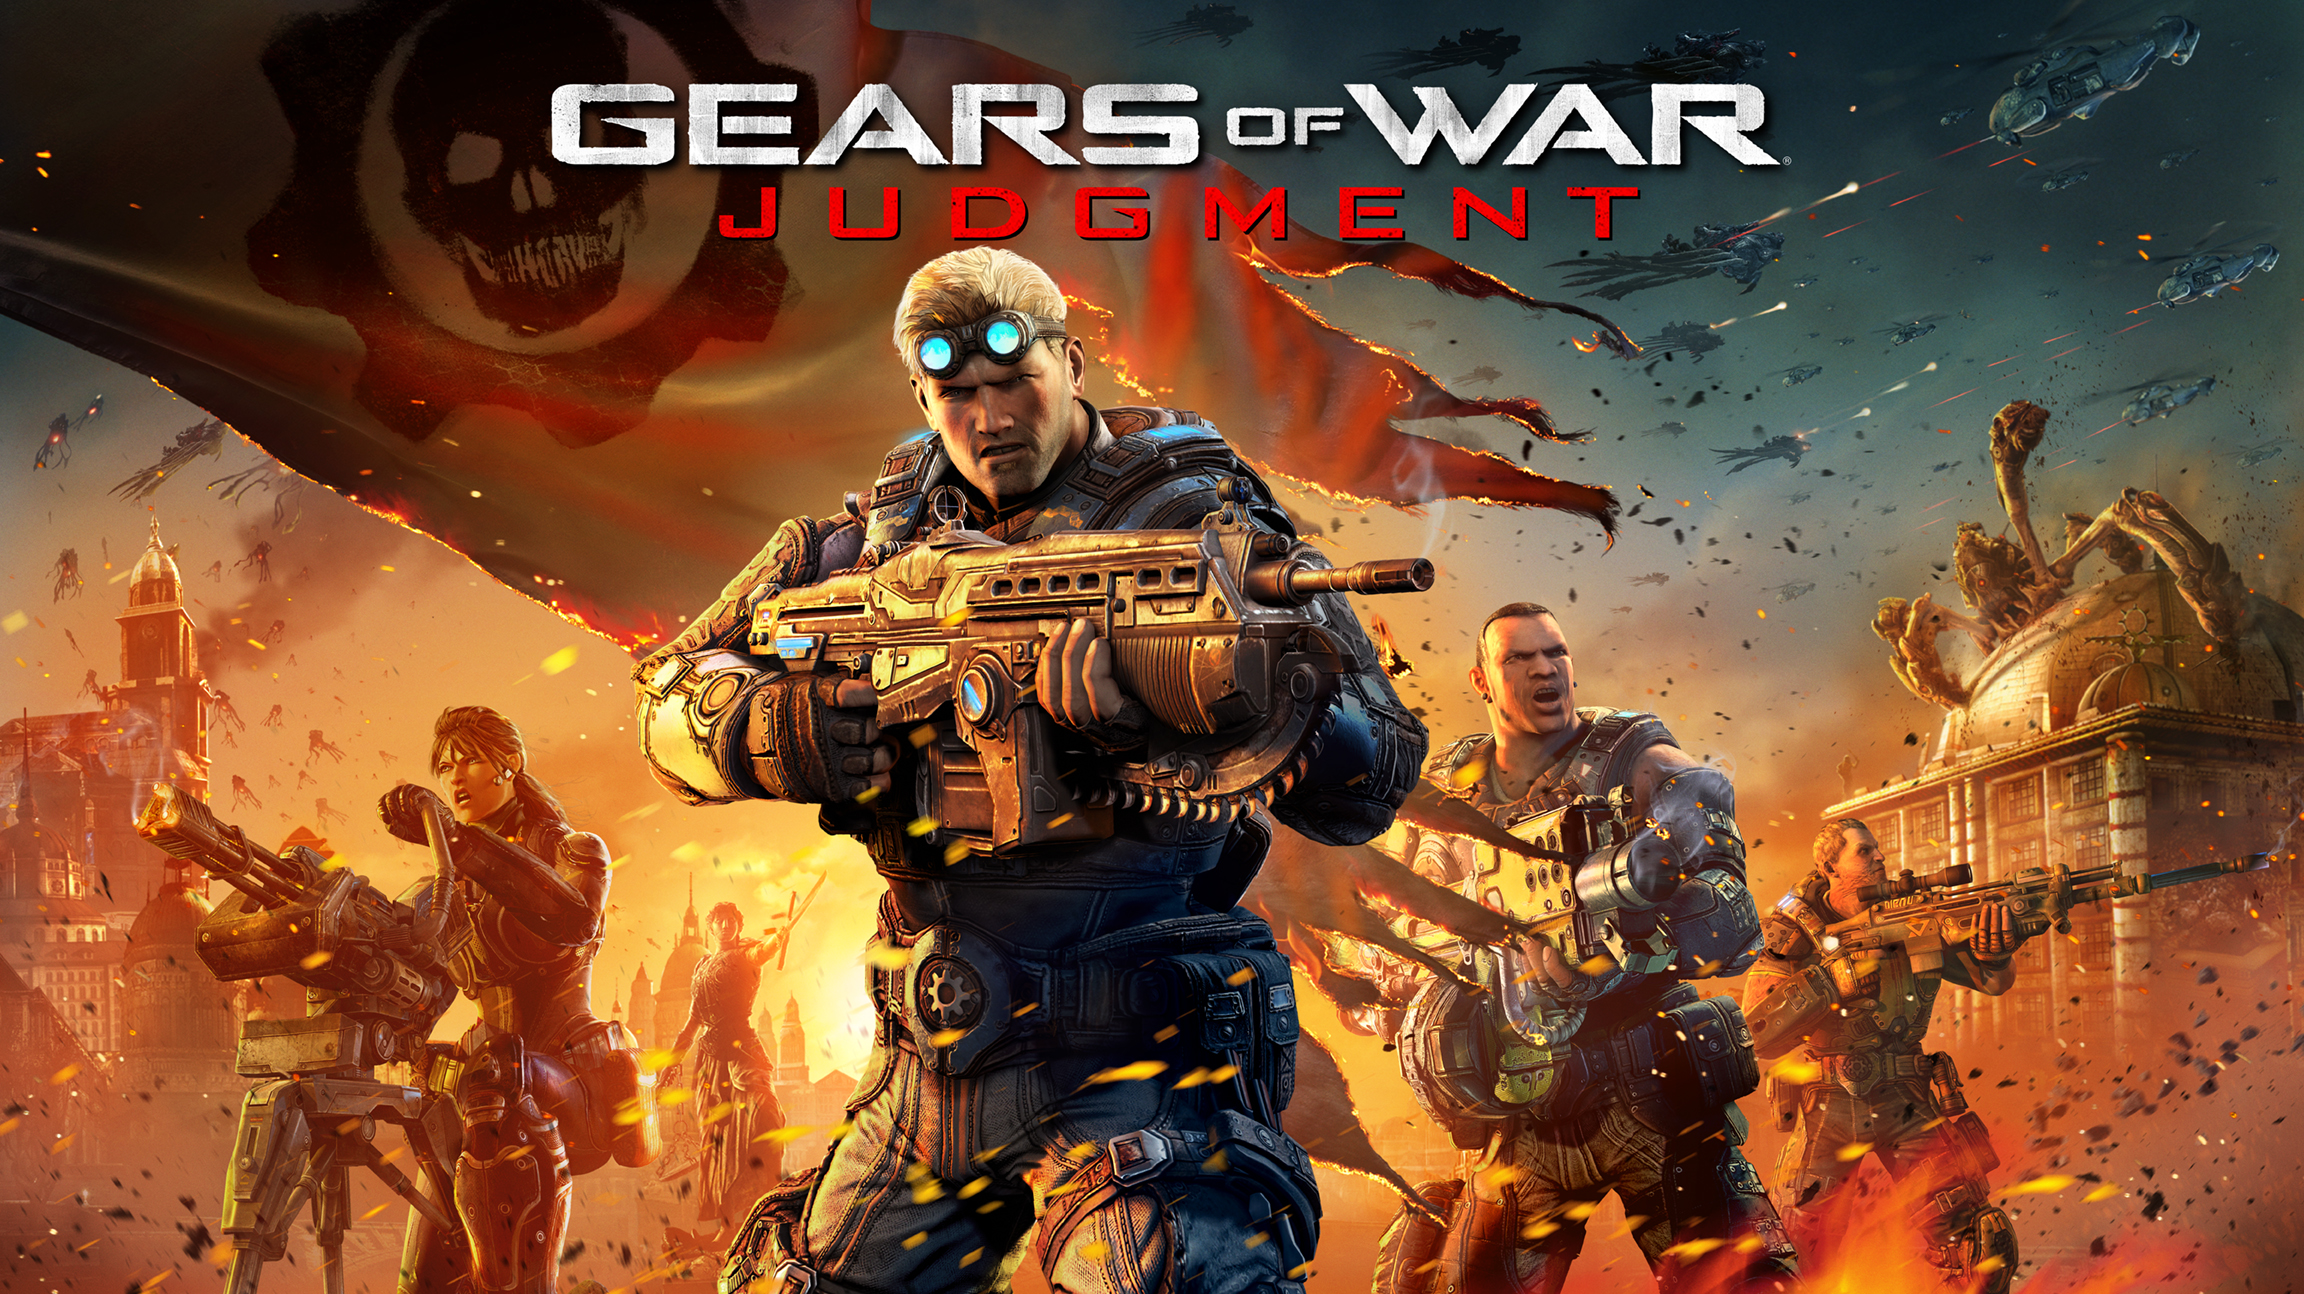 Gears Of War Judgment - 2304x1294 Wallpaper - teahub.io